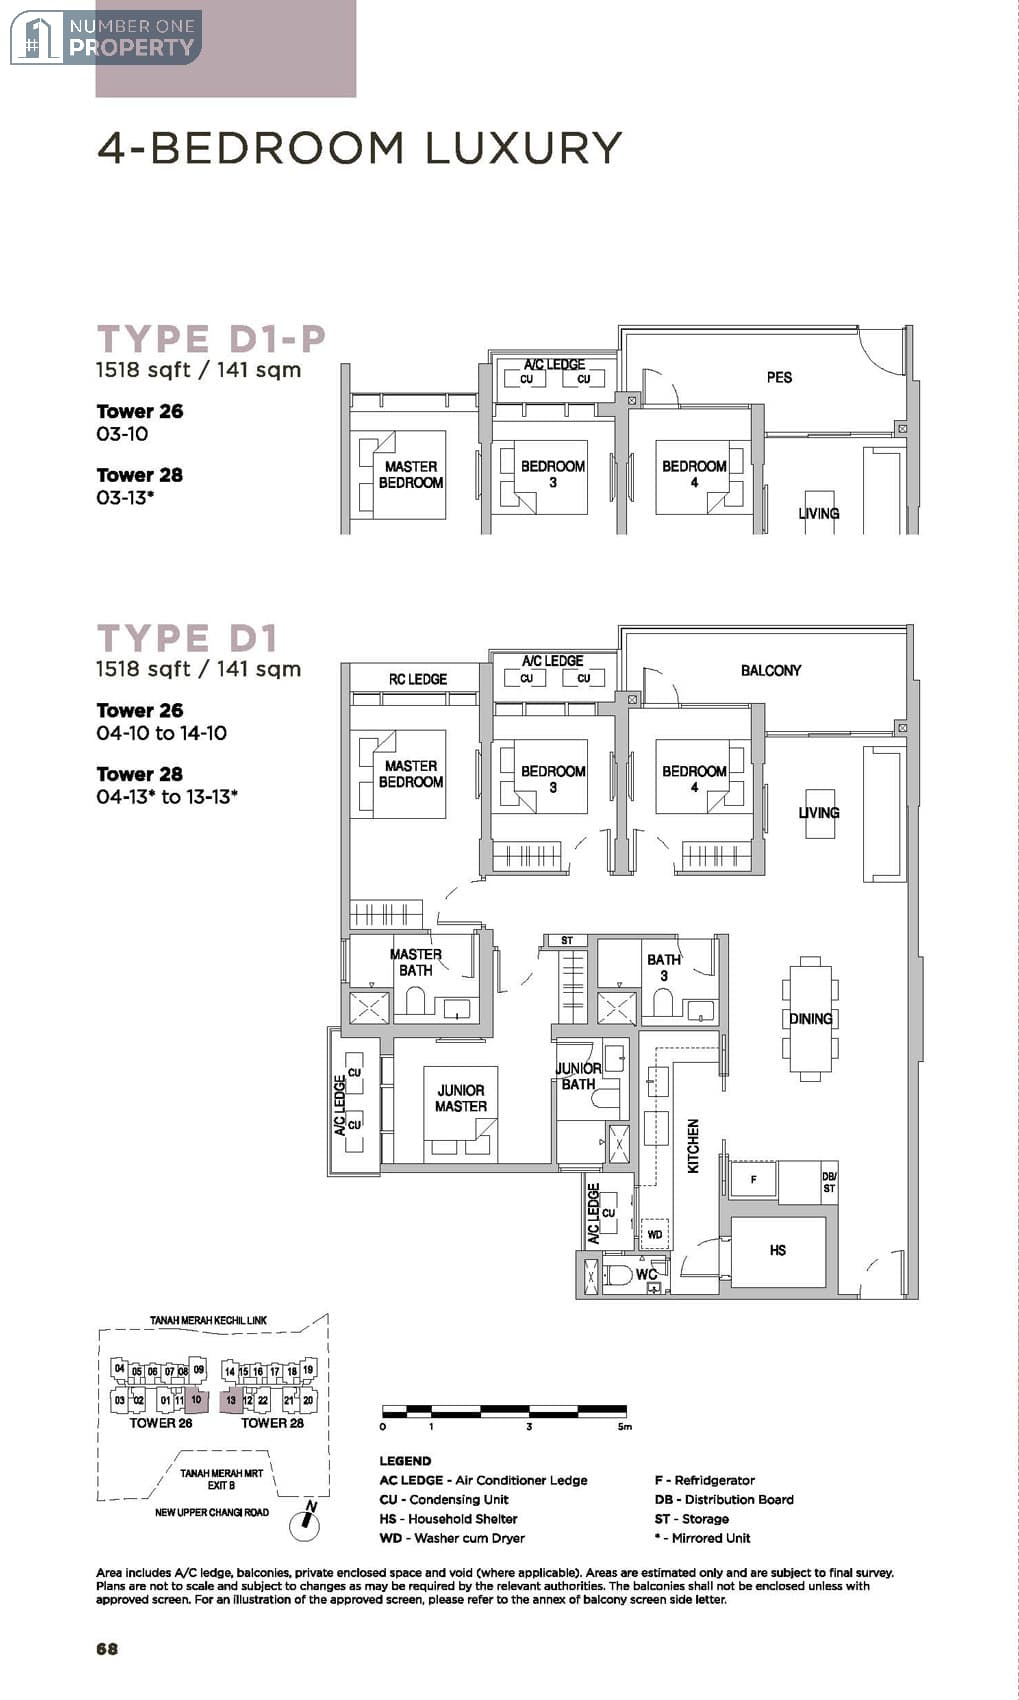 Sceneca Residence Floor Plan 4 Bedroom Luxury Type D11518sf